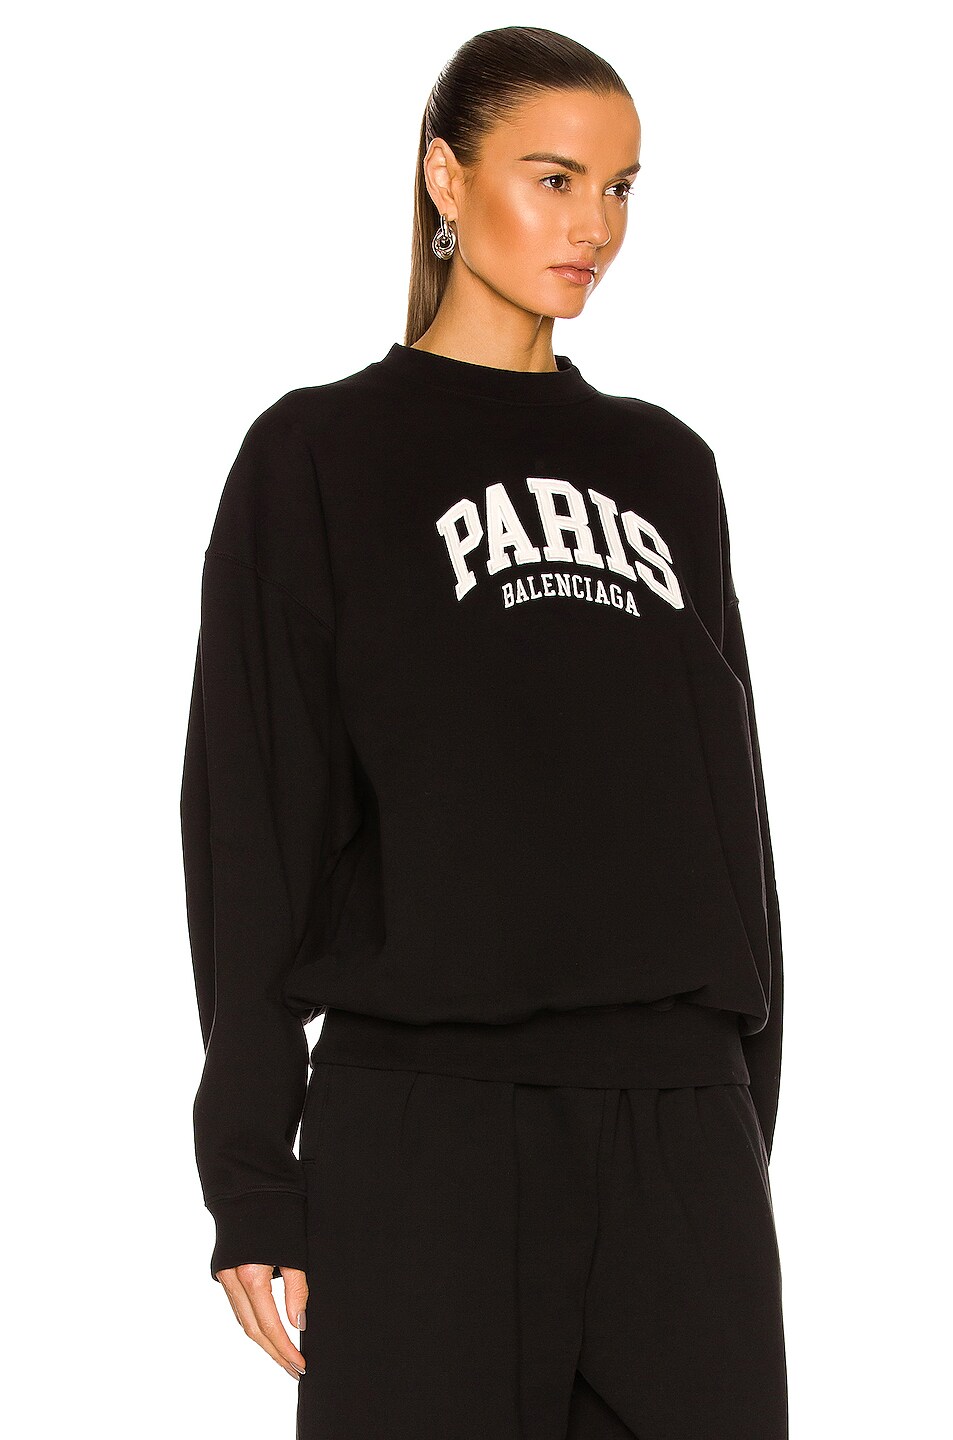 Balenciaga Paris Regular Crewneck Sweatshirt in Black & White | FWRD